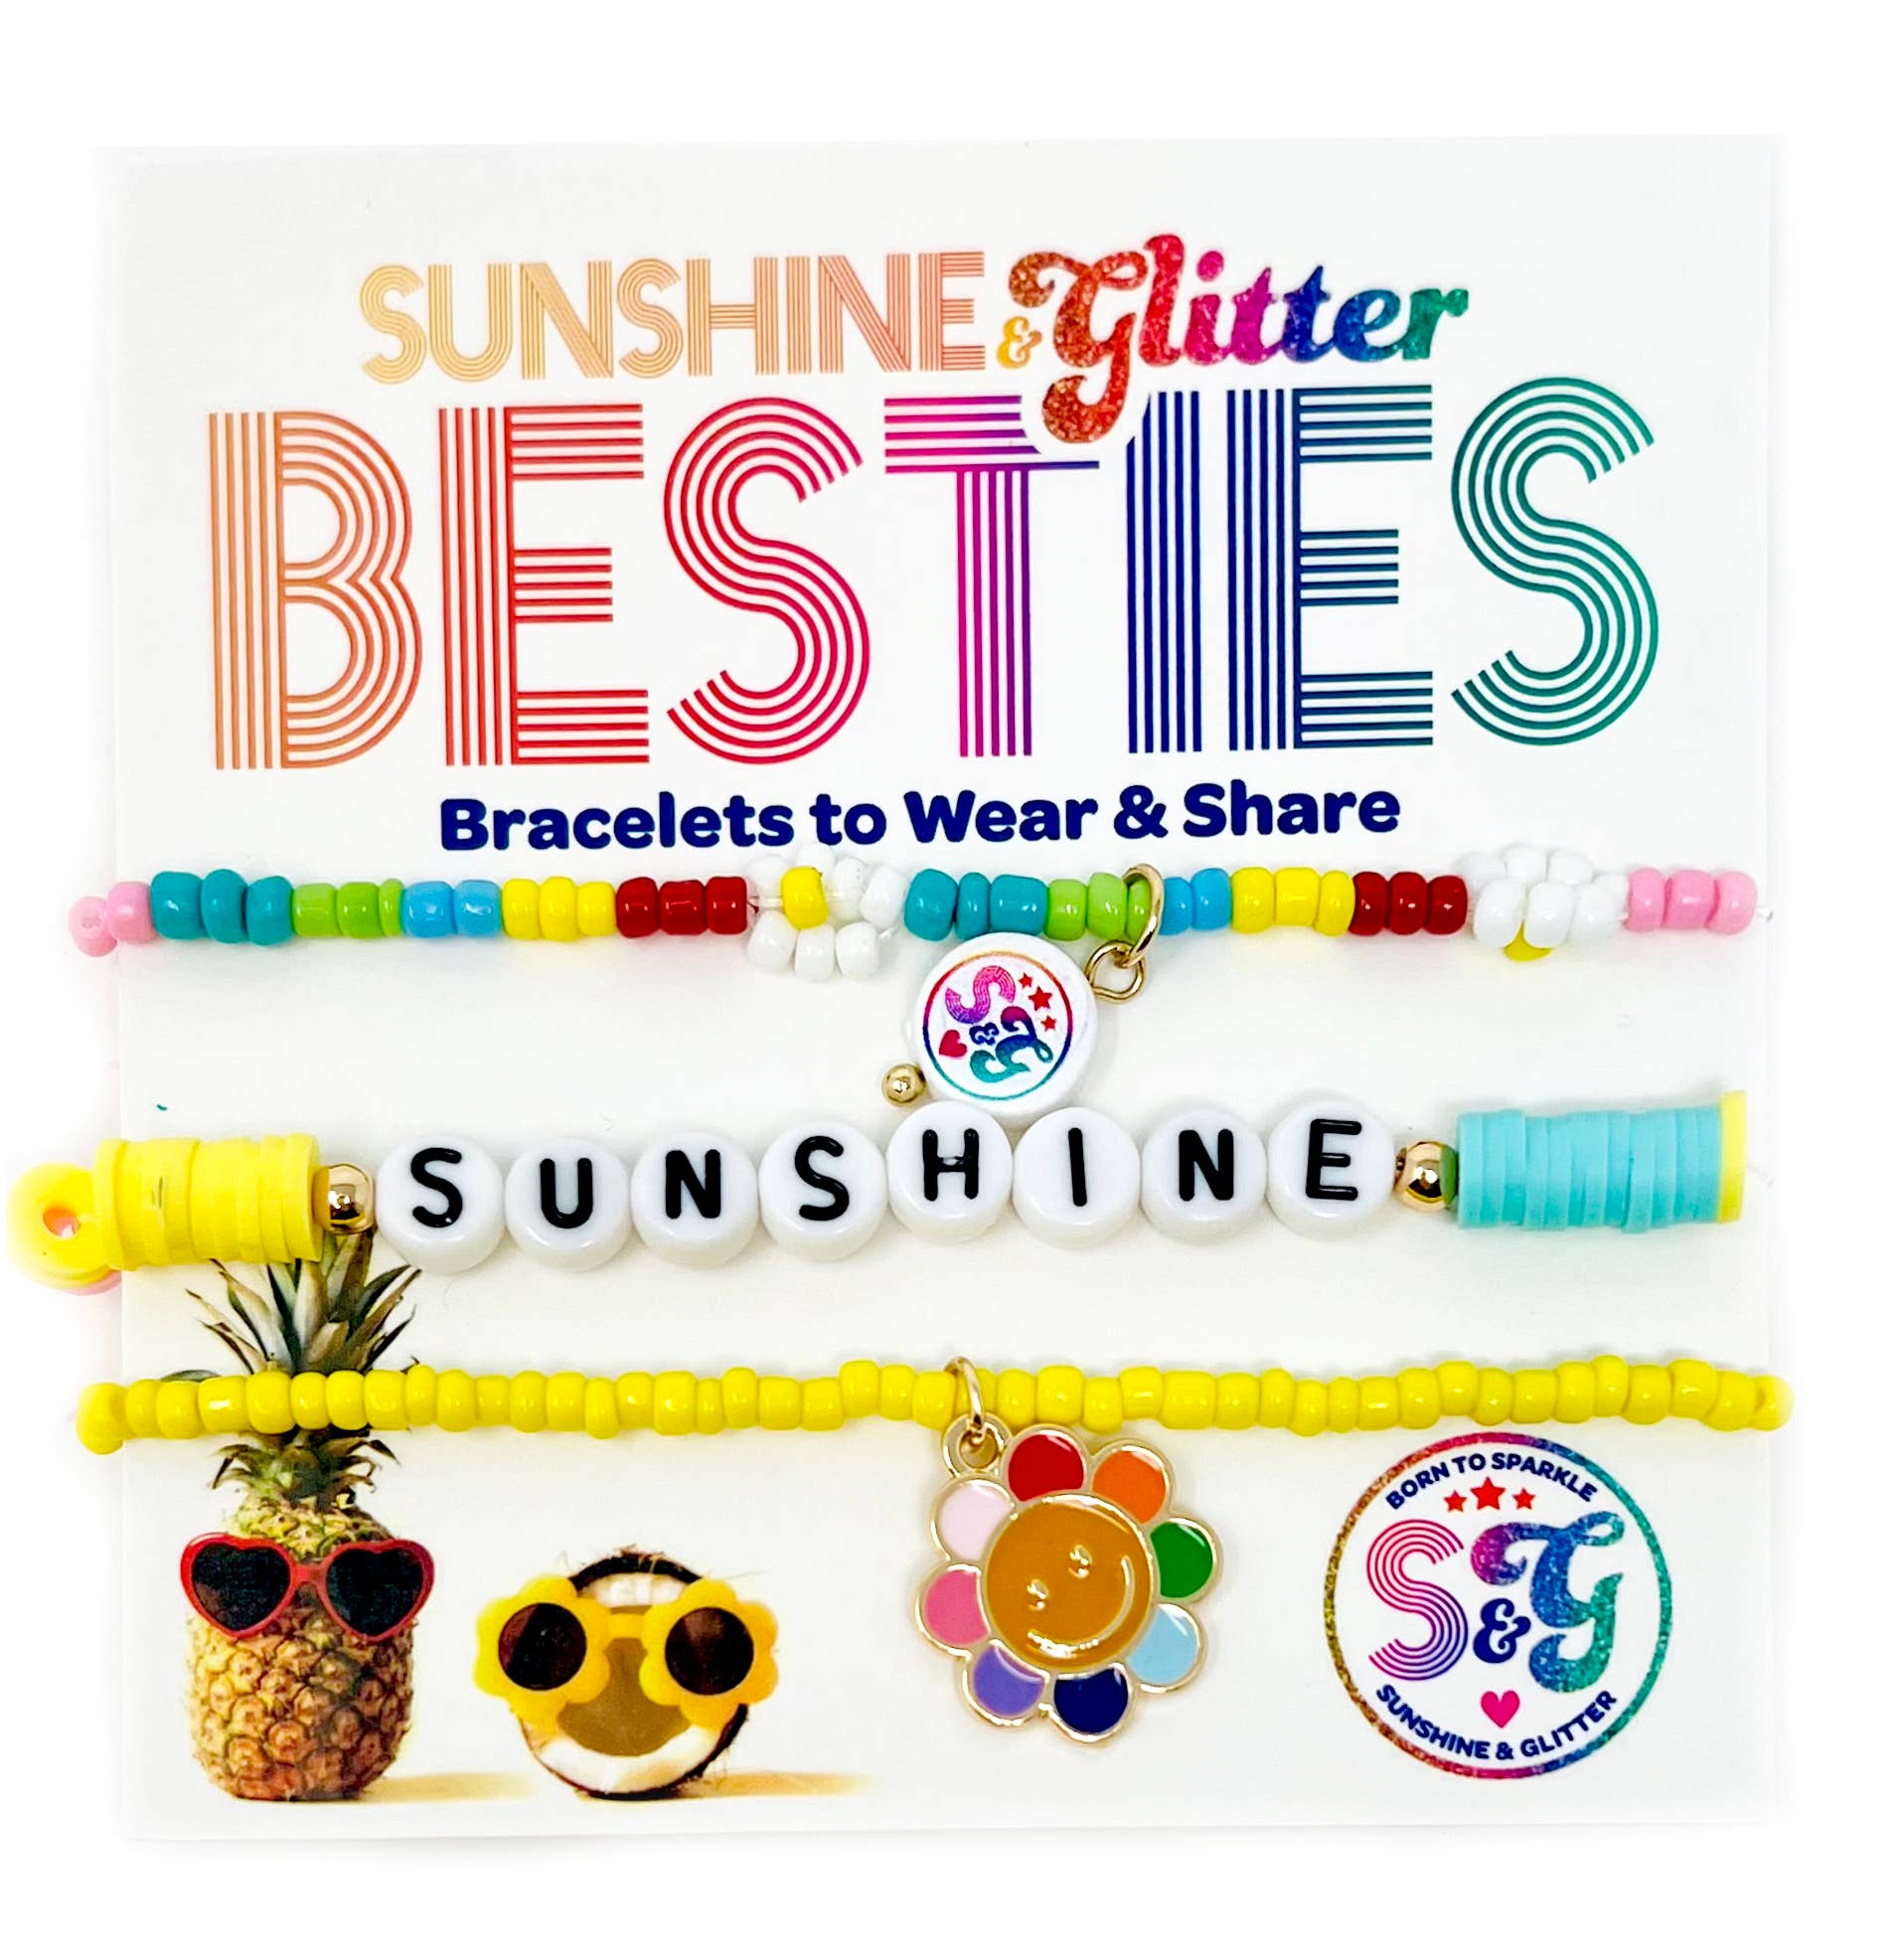 BESTIES Sunshine Bracelet Sets